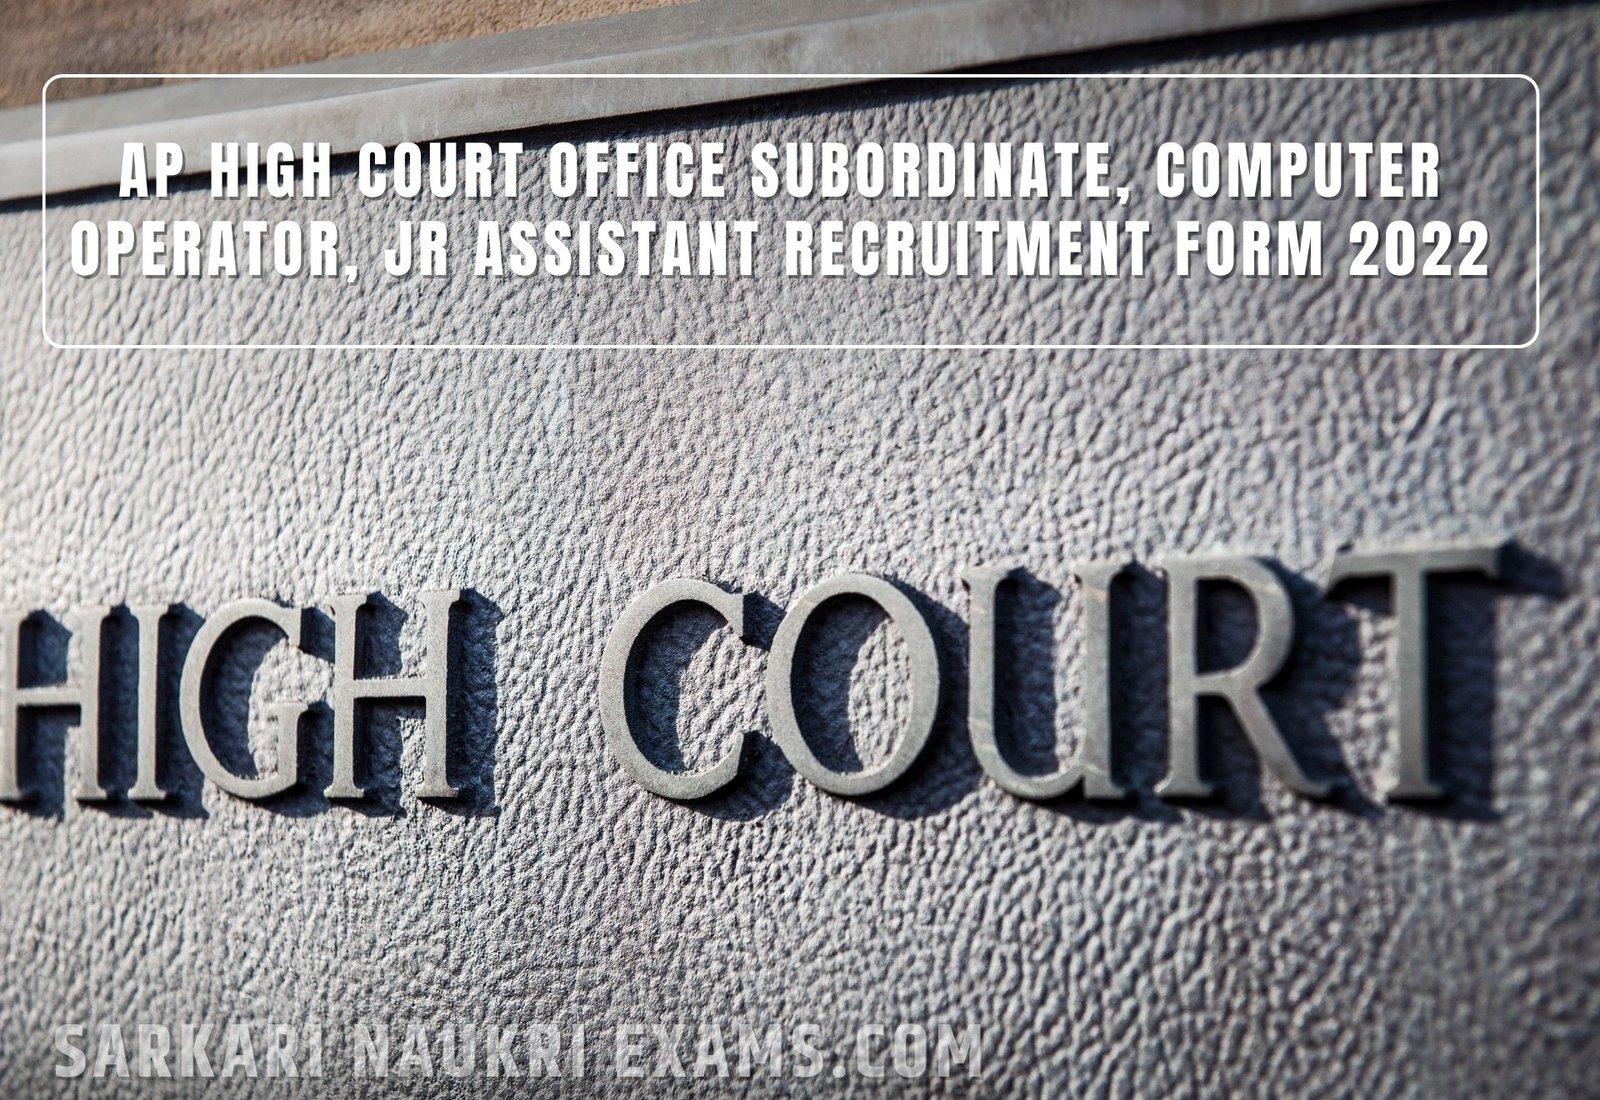 AP High Court Office Subordinate, Computer Operator, Jr Assistant Recruitment Form 2022 | 10th Pass Job